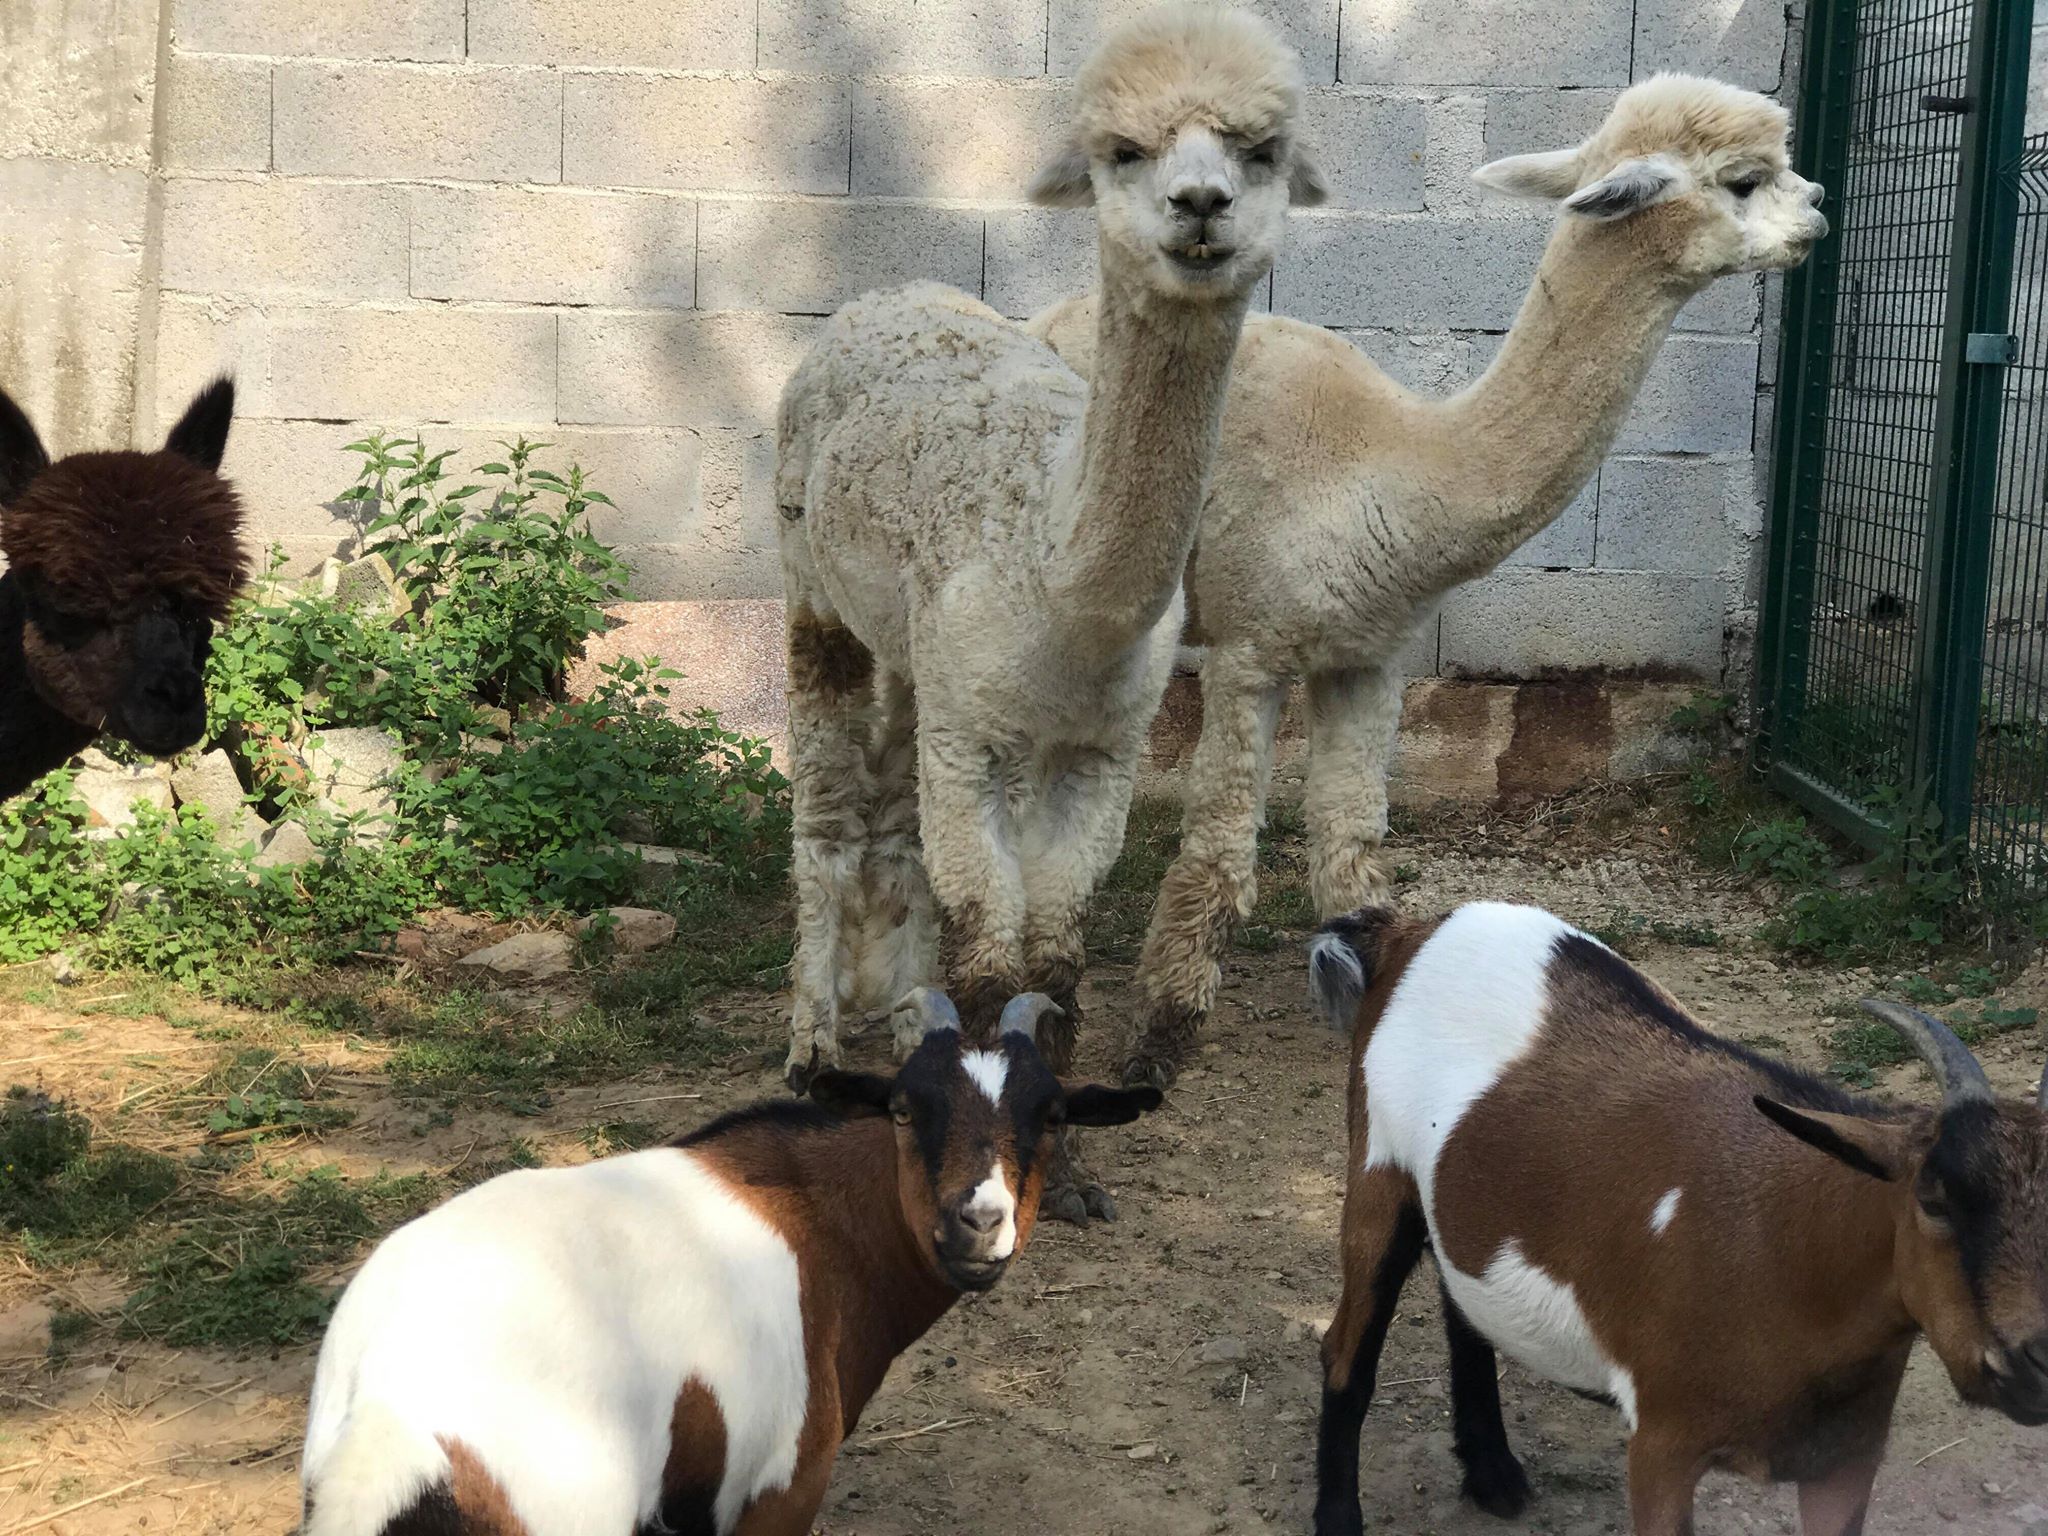 Photos of the alpacas and goats